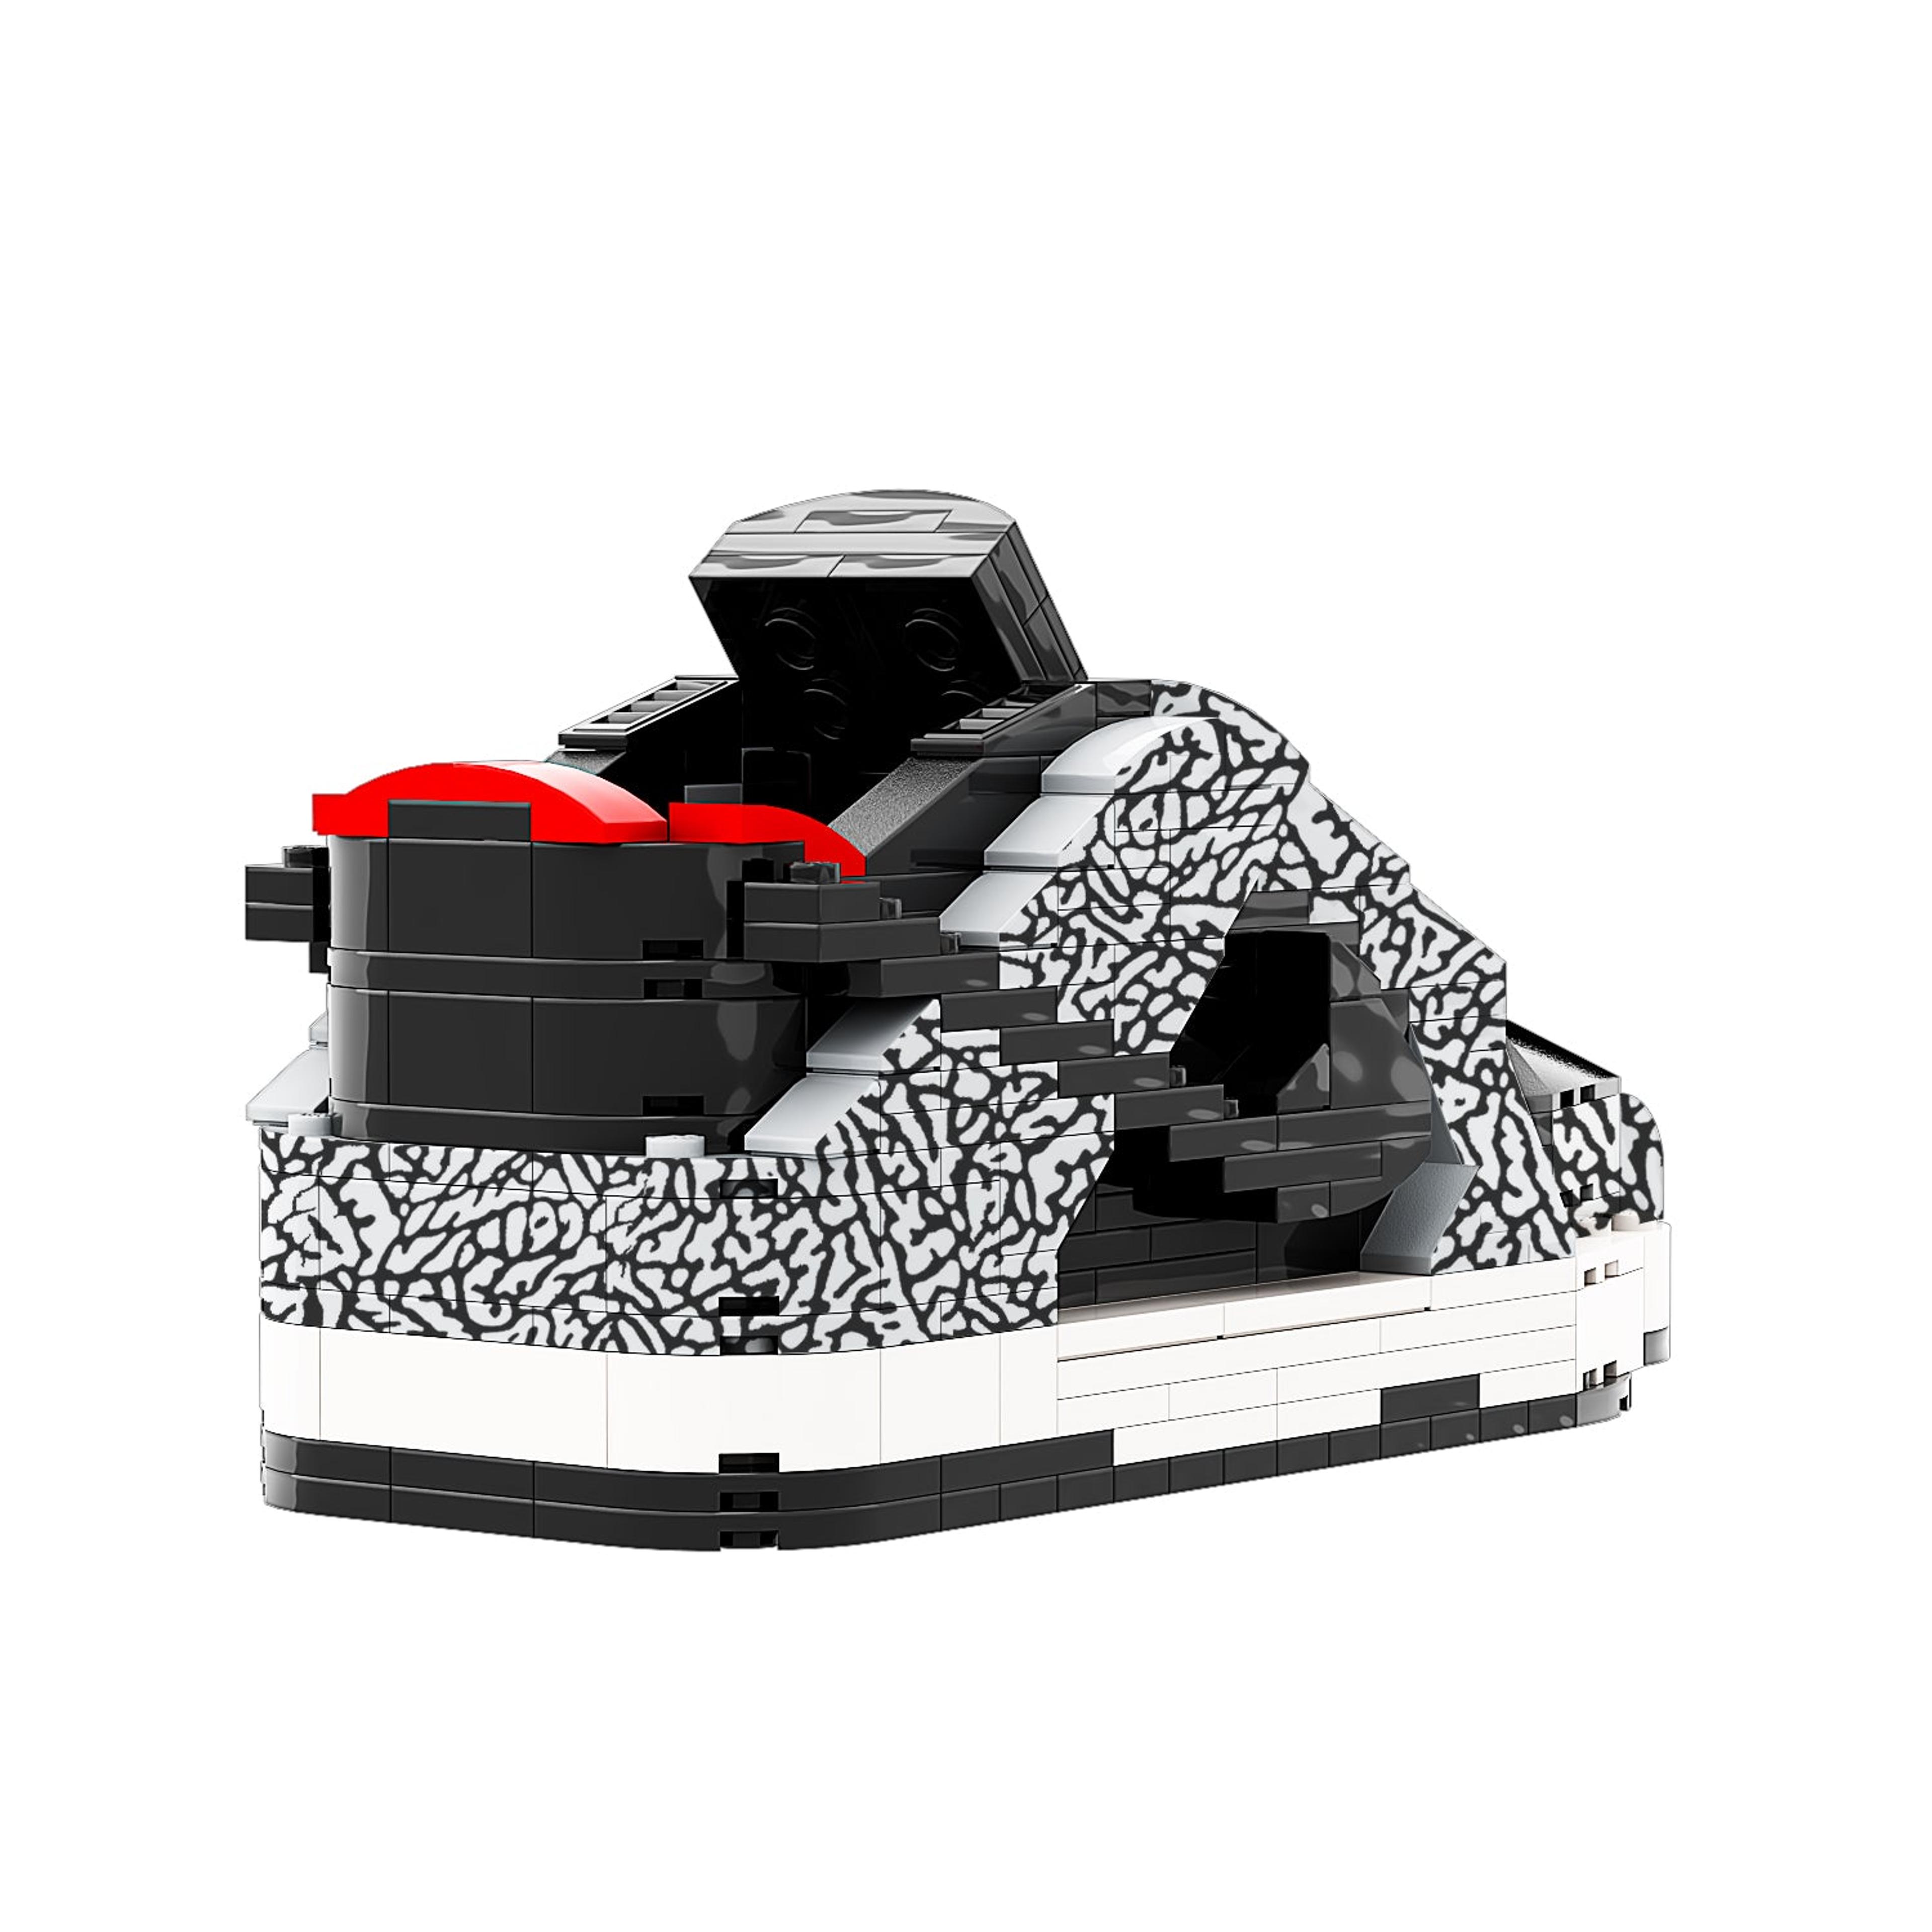 Alternate View 7 of REGULAR SB Dunk SUP "Black Cement" Sneaker Bricks with Mini Figu